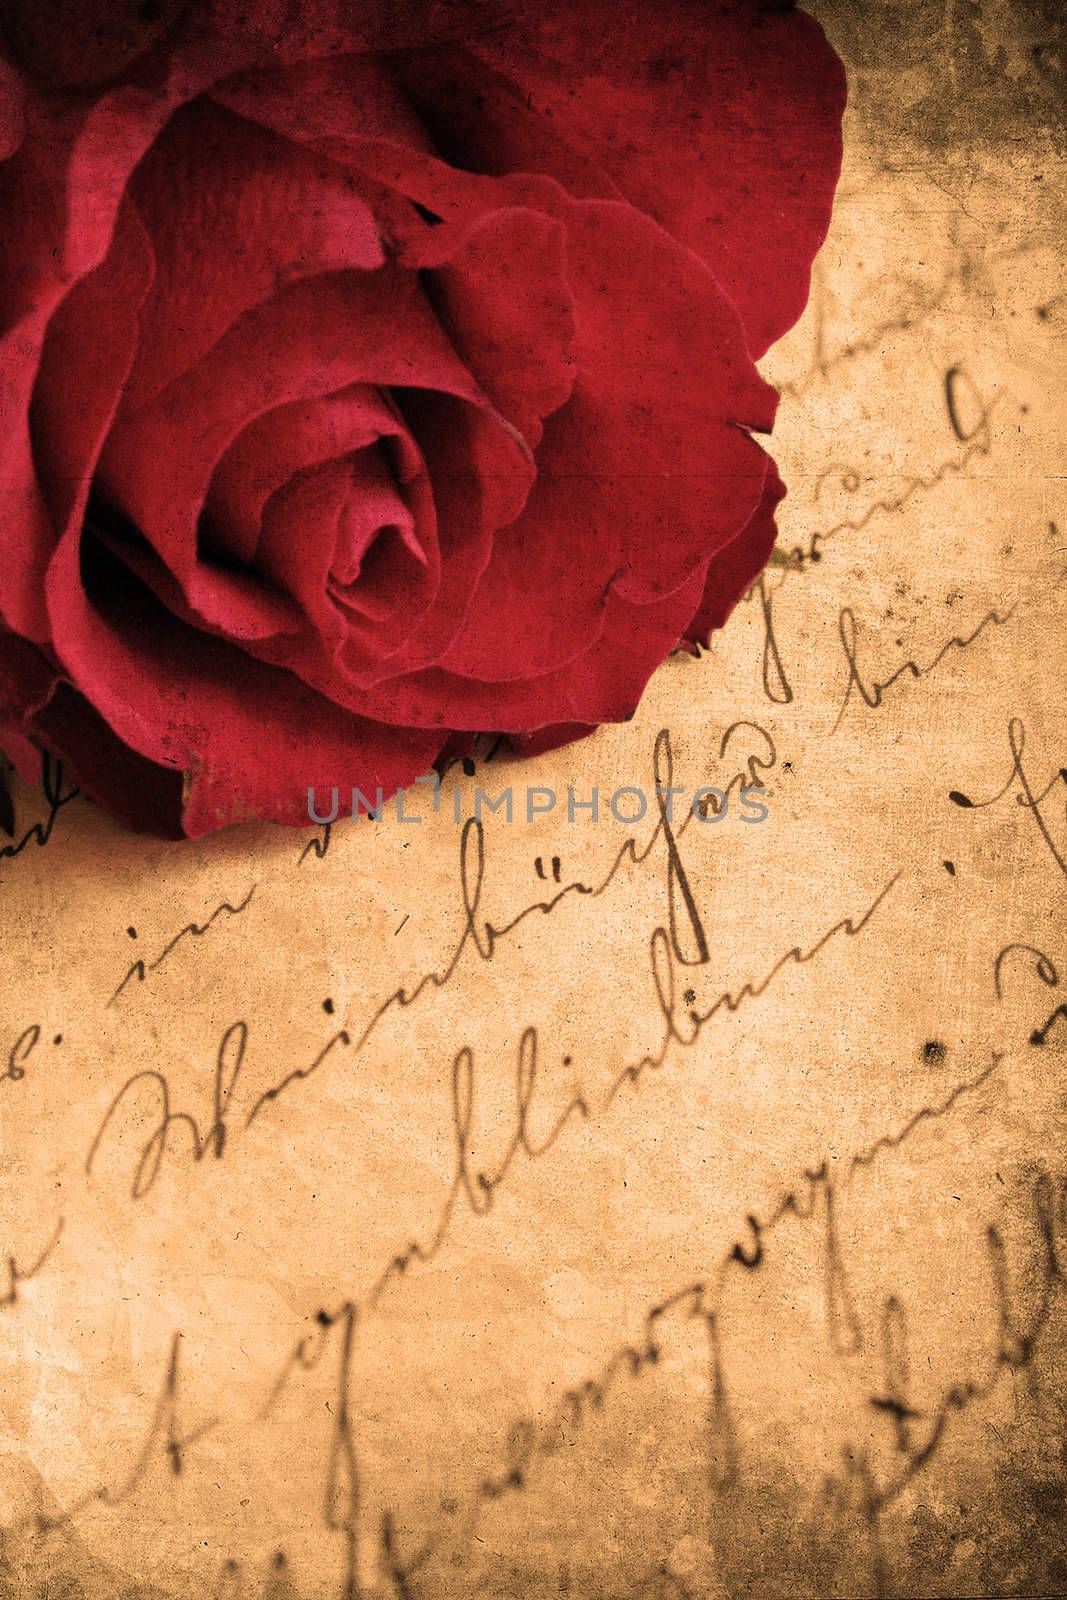 Retro look of beautiful red rose